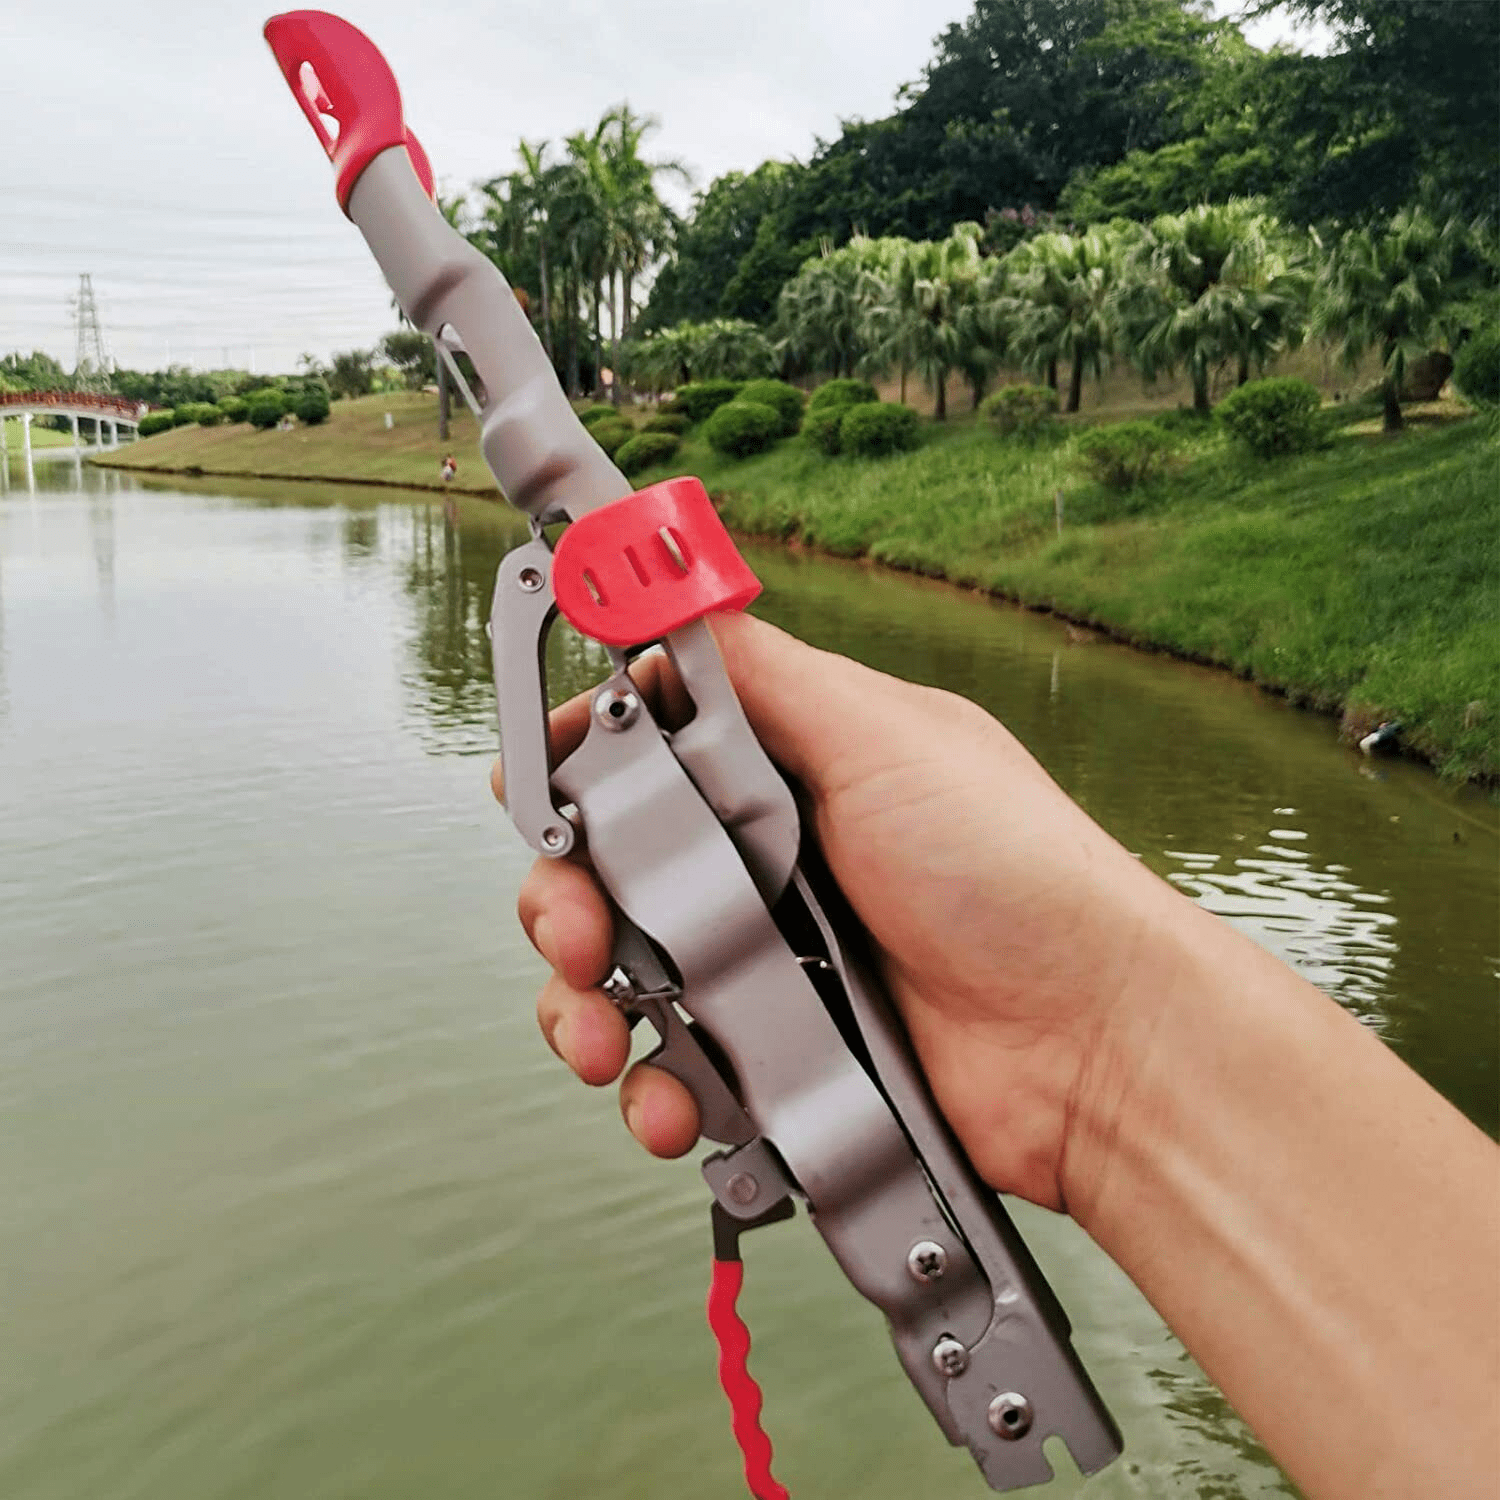 Spring-loaded fishing rod holder : r/toolgifs